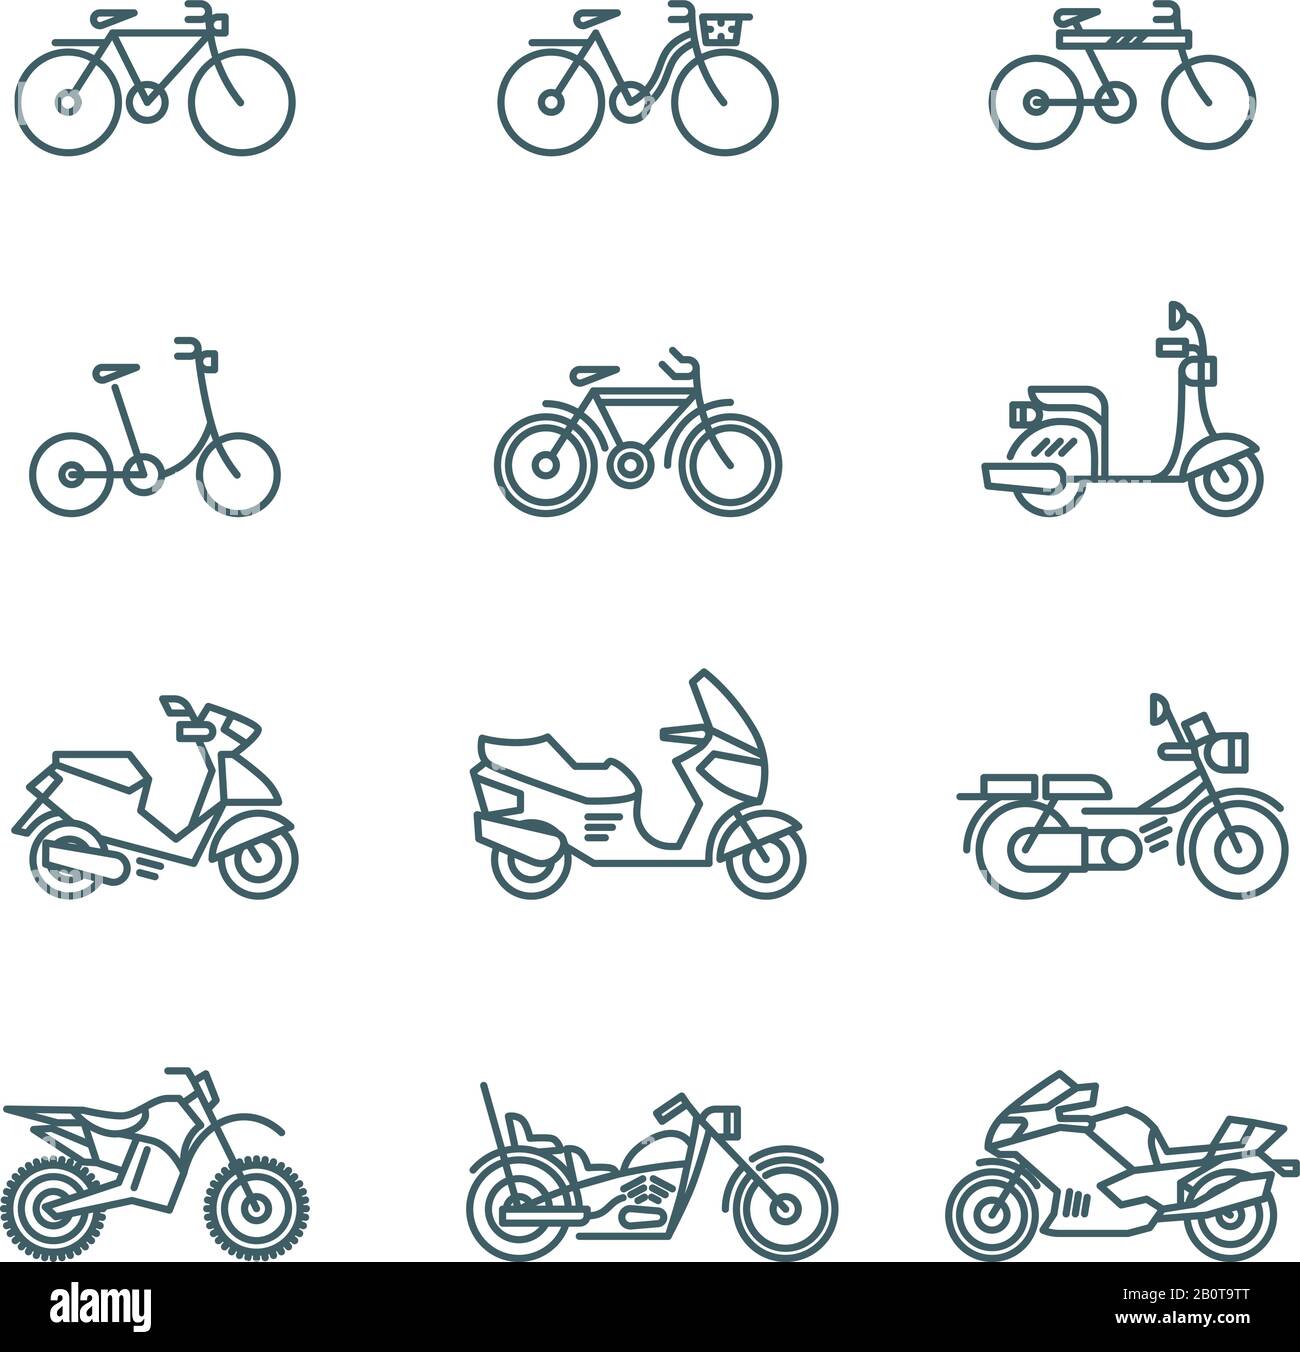 Motorrad, Motorrad, Motorroller, Fahrrad, Fahrrad dünne Linie Vektor-Symbole. Lineares Motorrad und Fahrrad, Abbildung von Roller und Motorrad Stock Vektor